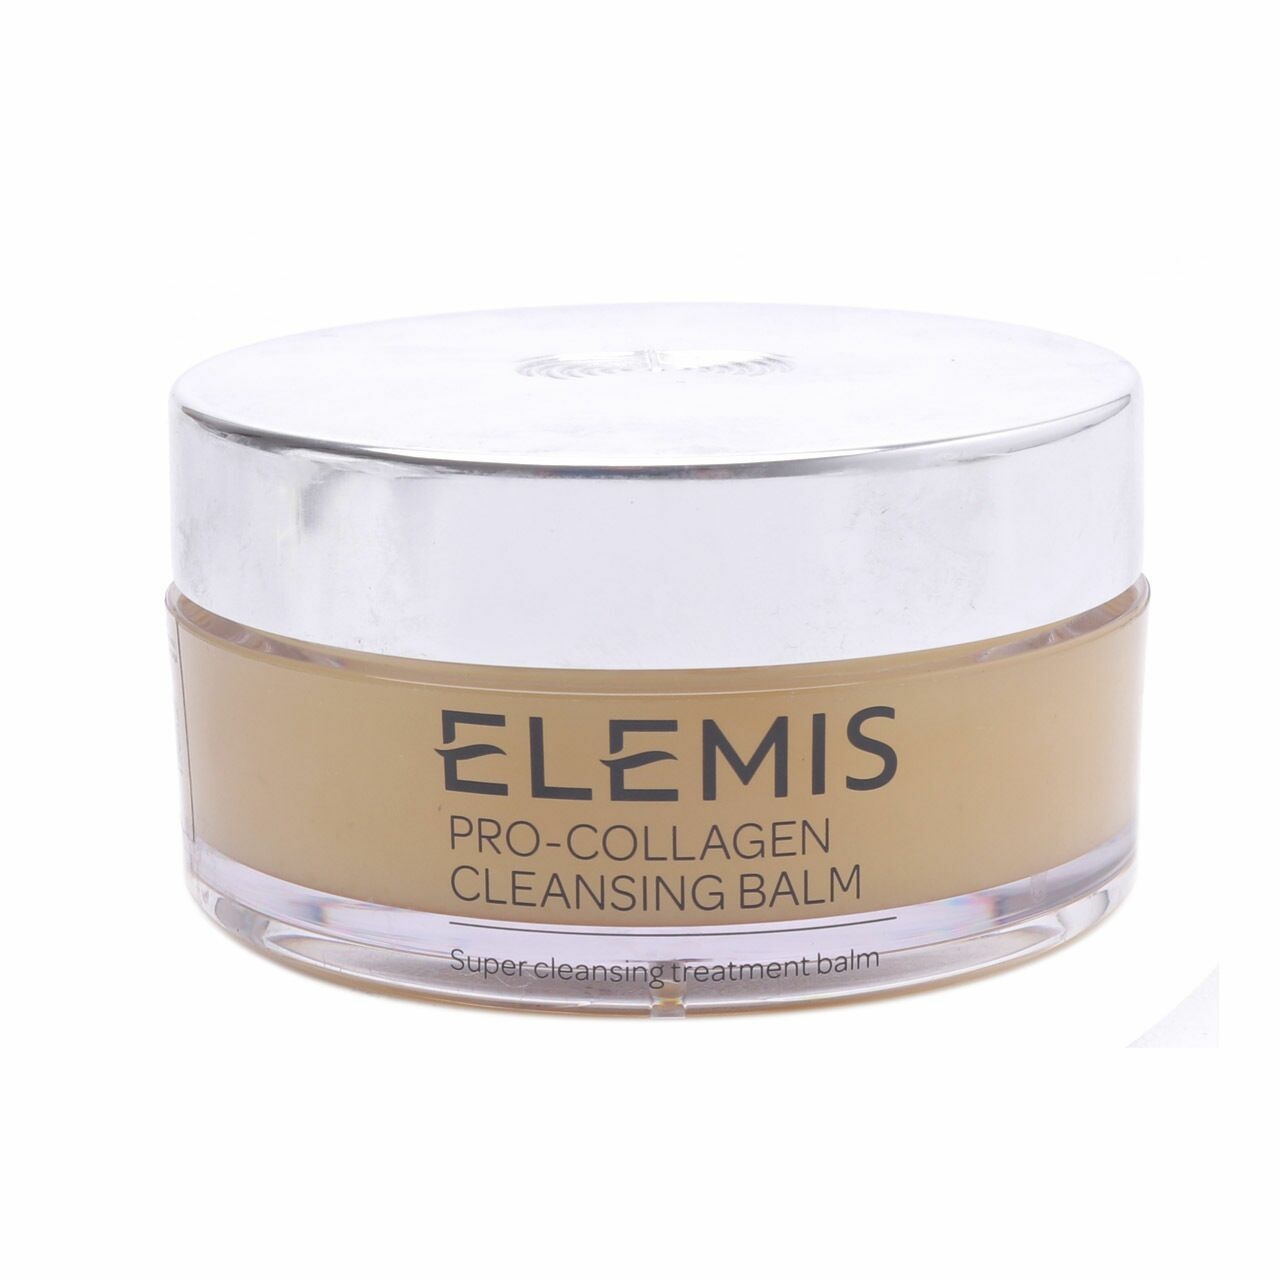 Elemis Pro-Collagen Cleansing Balm Skin Care